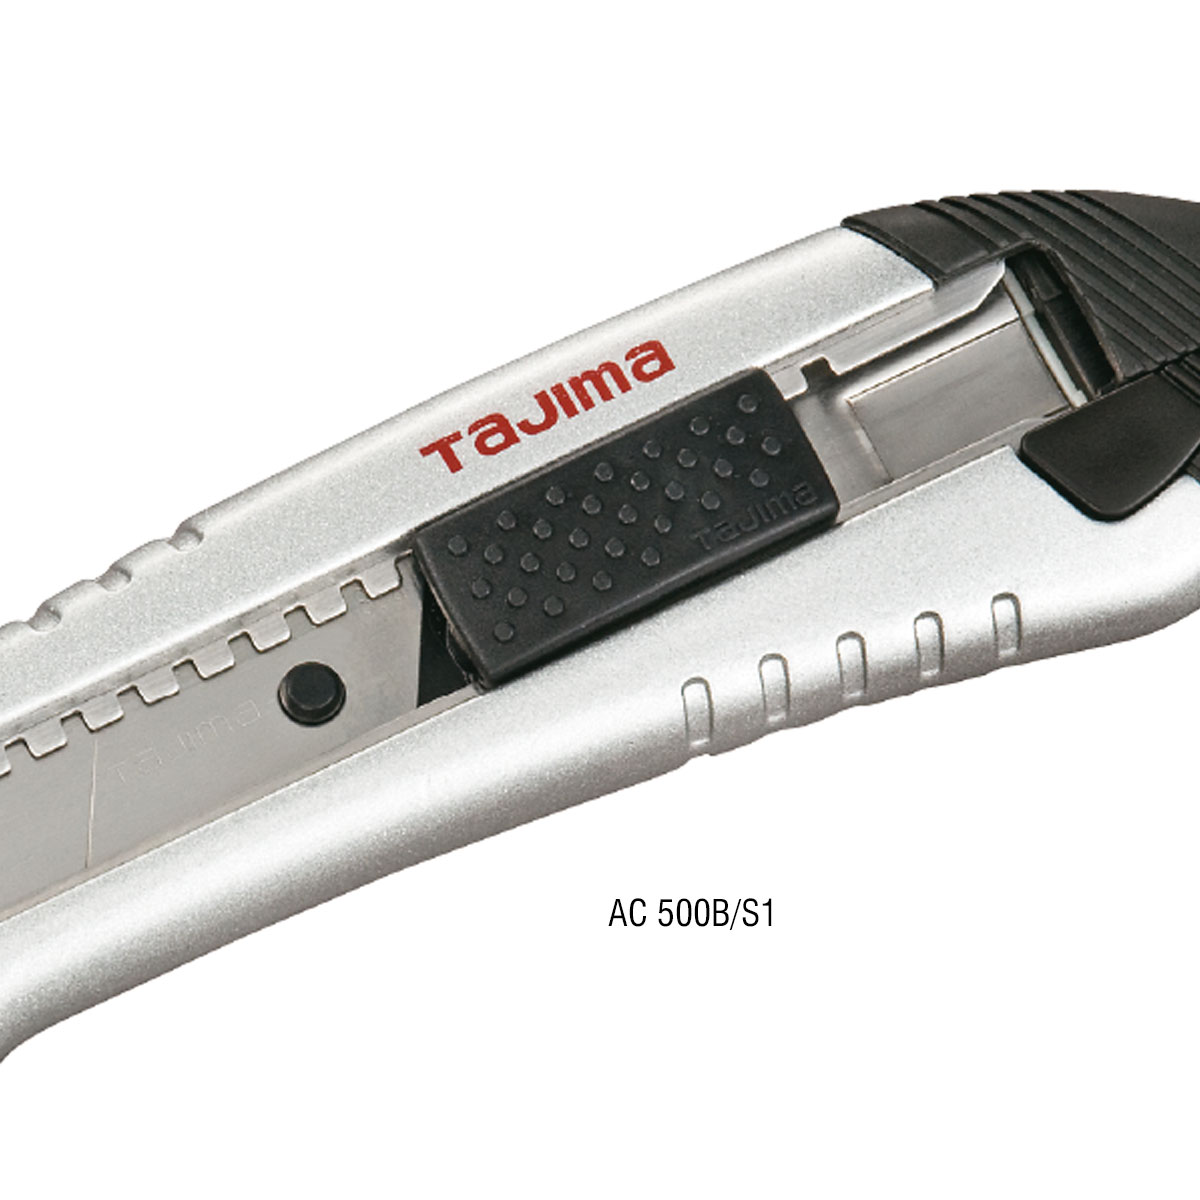 Tajima Aluminist 18mm Cutter Messer mit Spezialgriff aus Aluminium